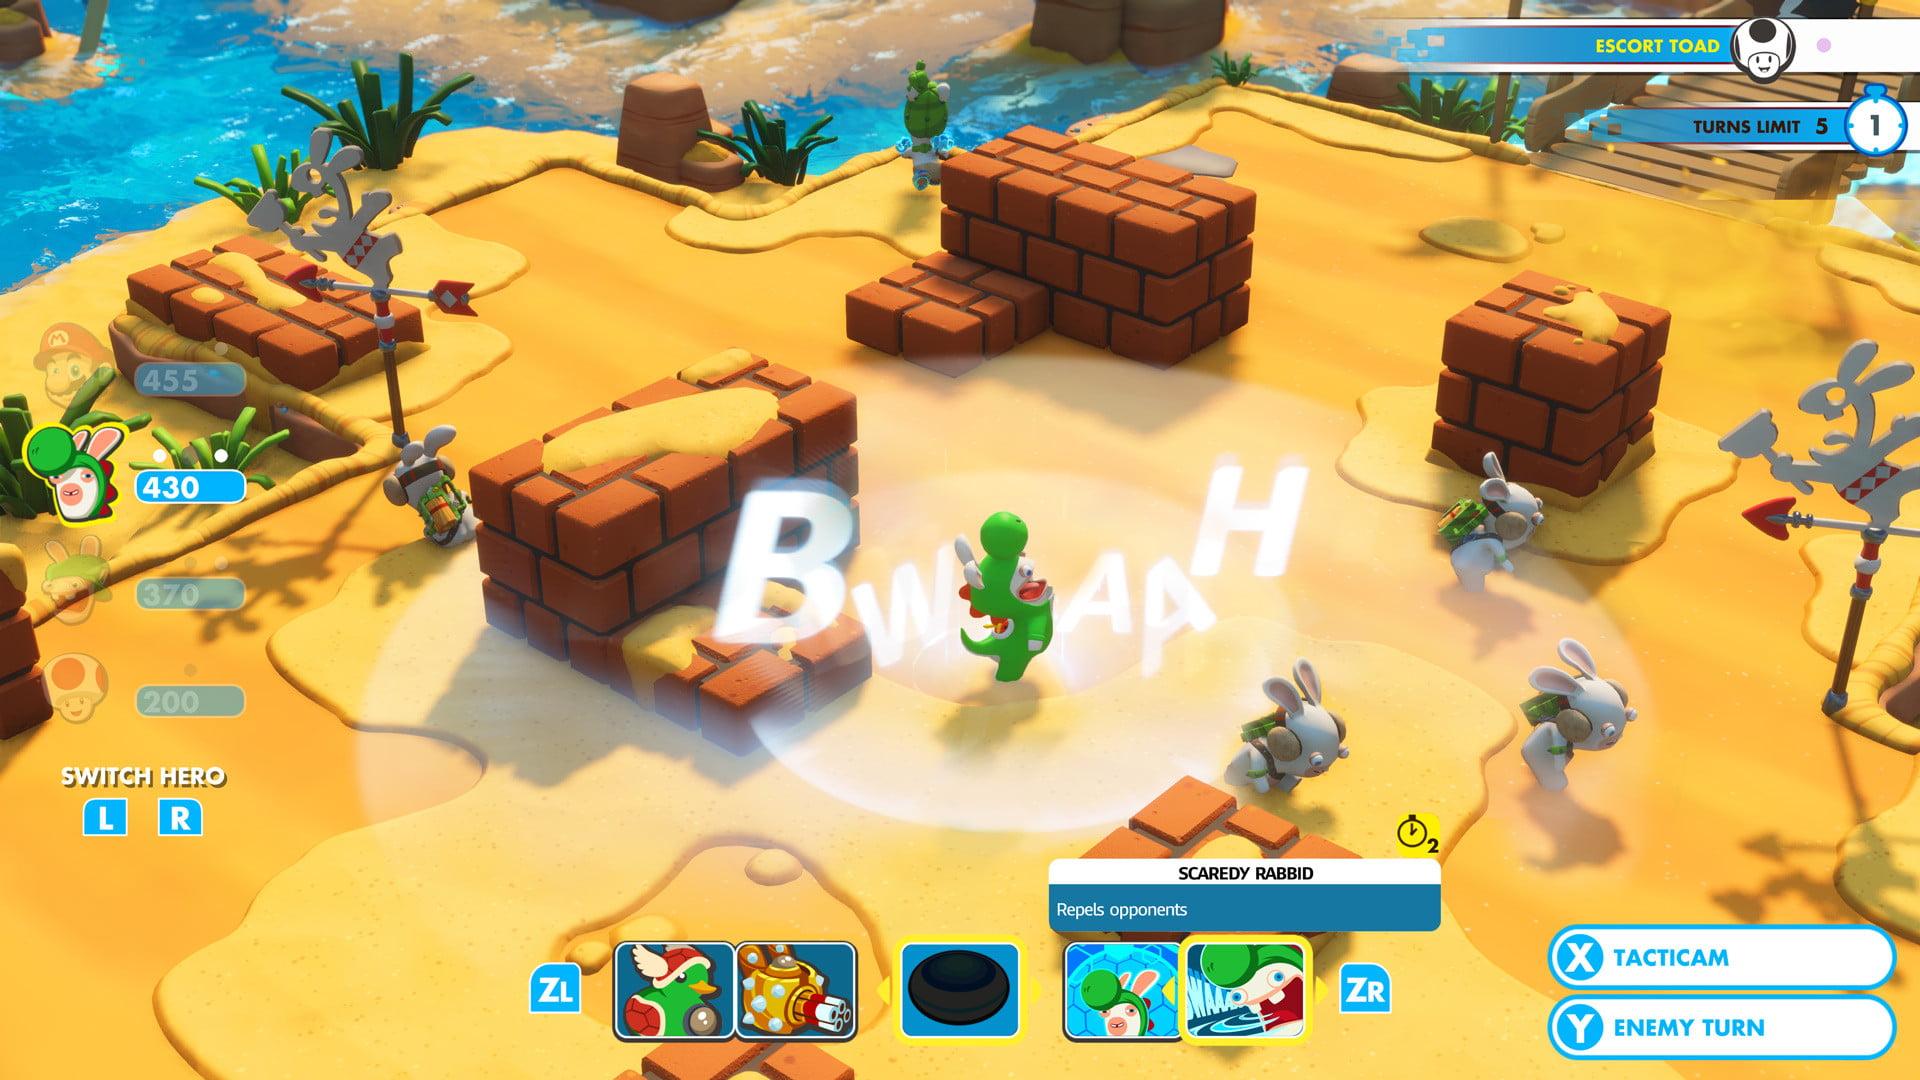 Mario + Rabbids Kingdom Battle' Review